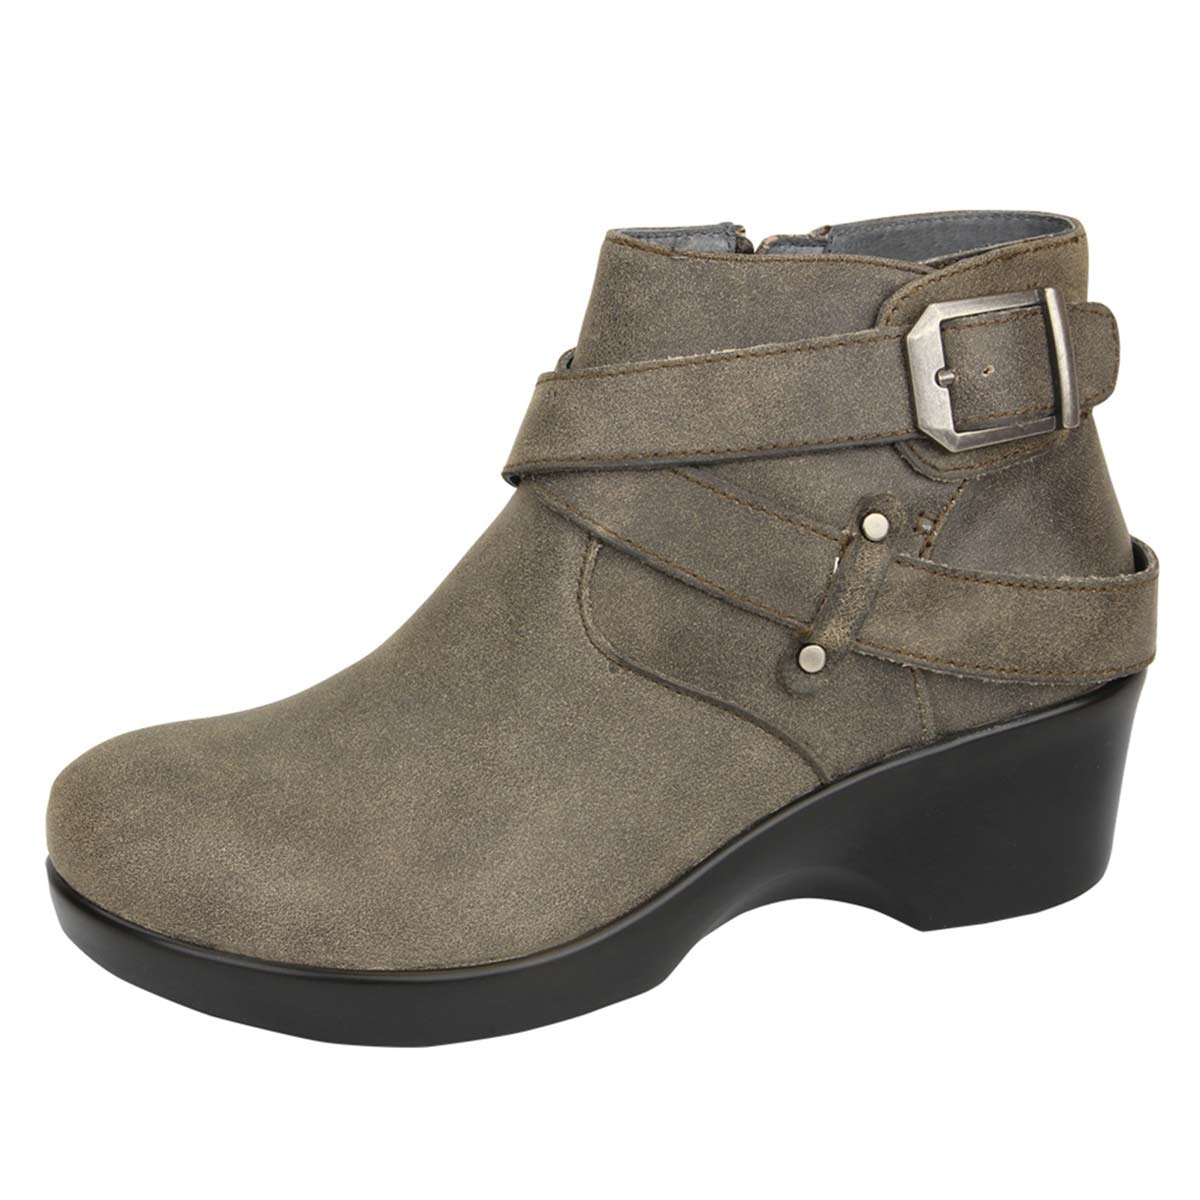 Alegria Shoes Eva Drifted Boots | Alegria Free Shipping